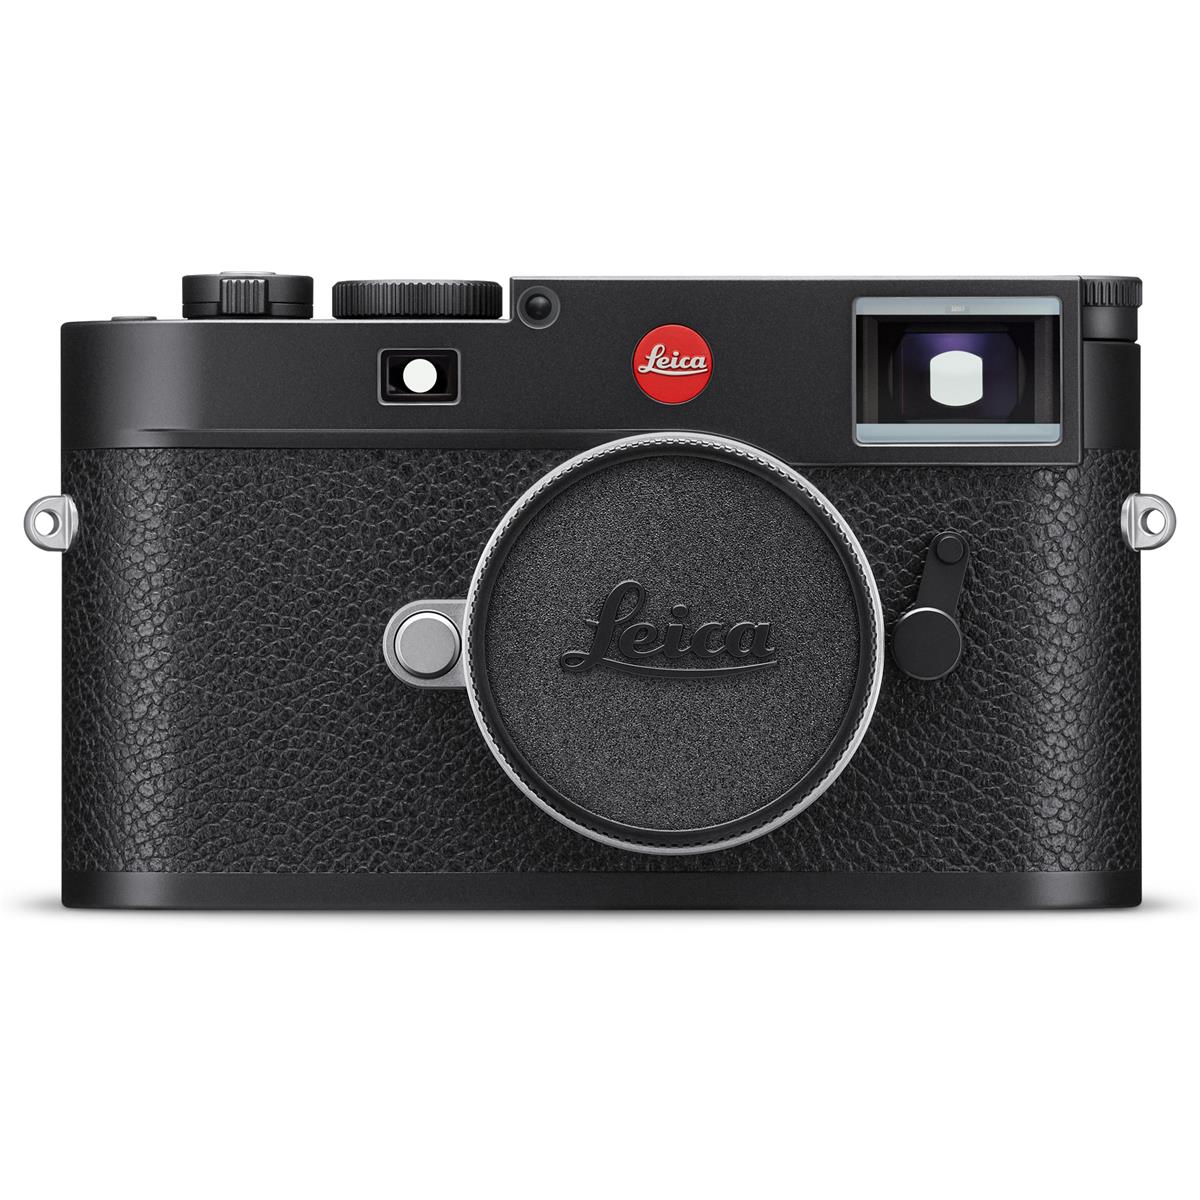 Leica M11 Digital Rangefinder Camera (Black Finish)